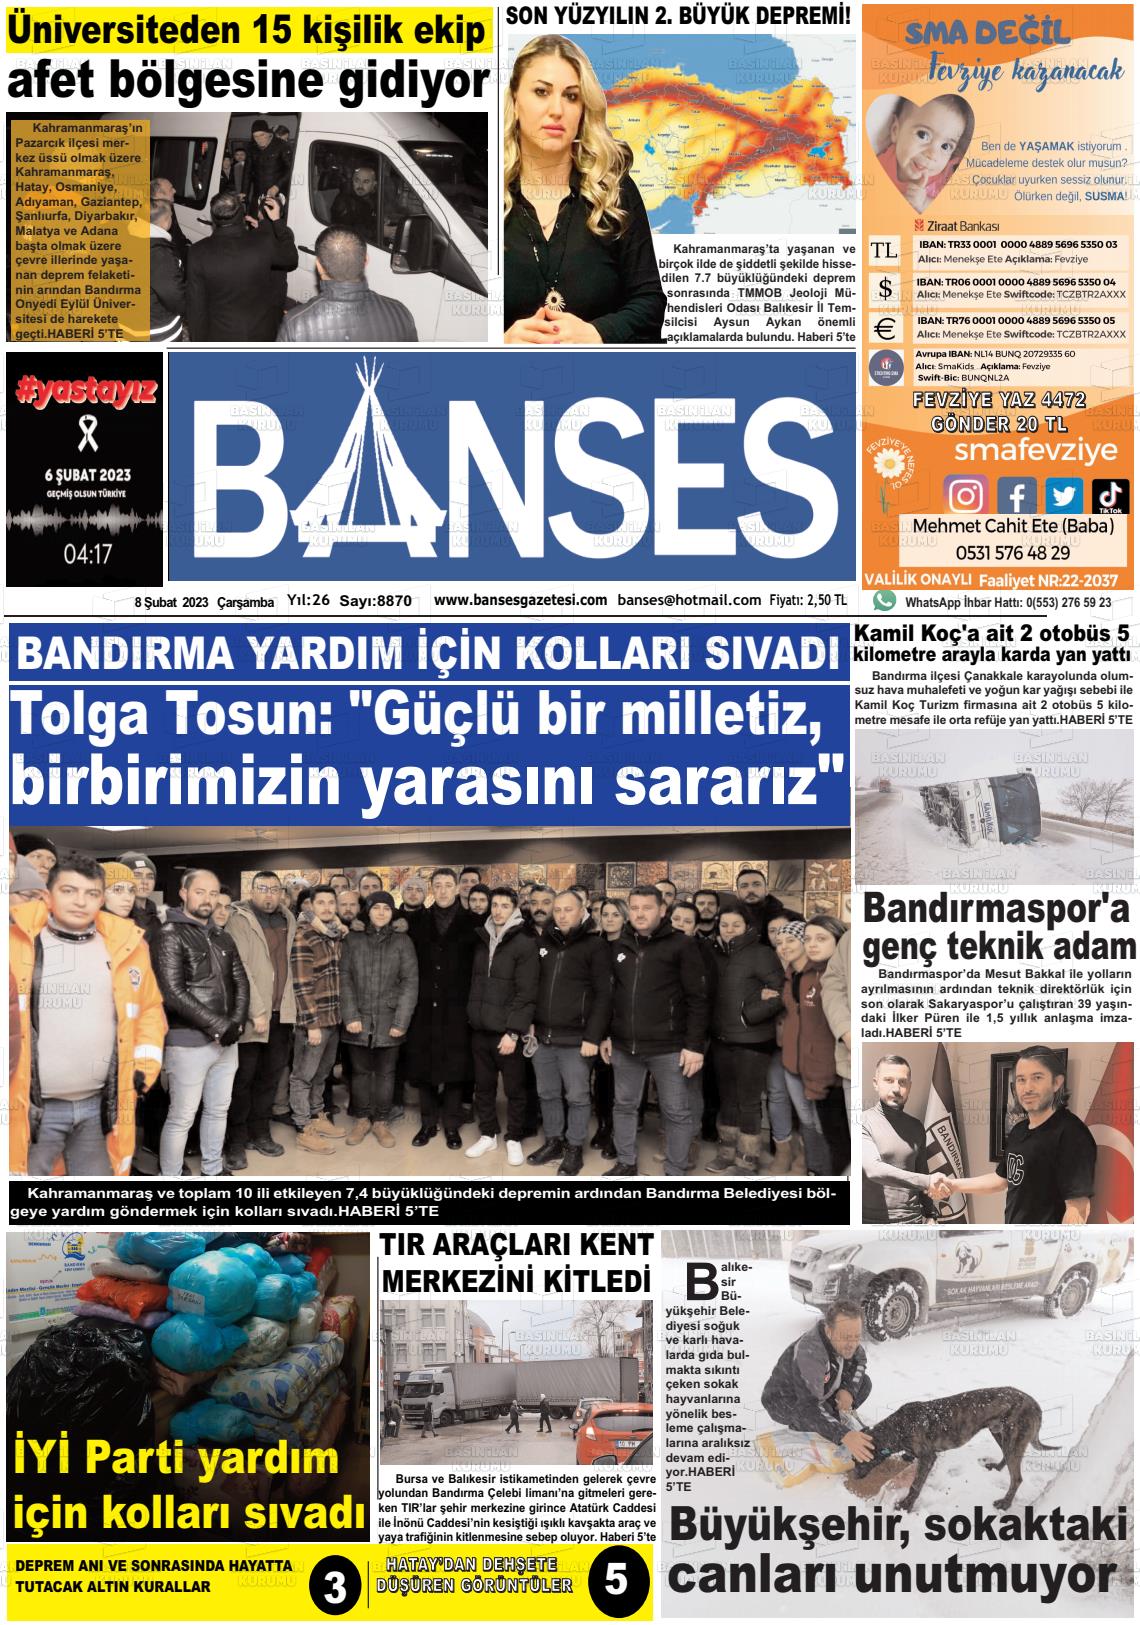 08 Şubat 2023 Banses Gazete Manşeti